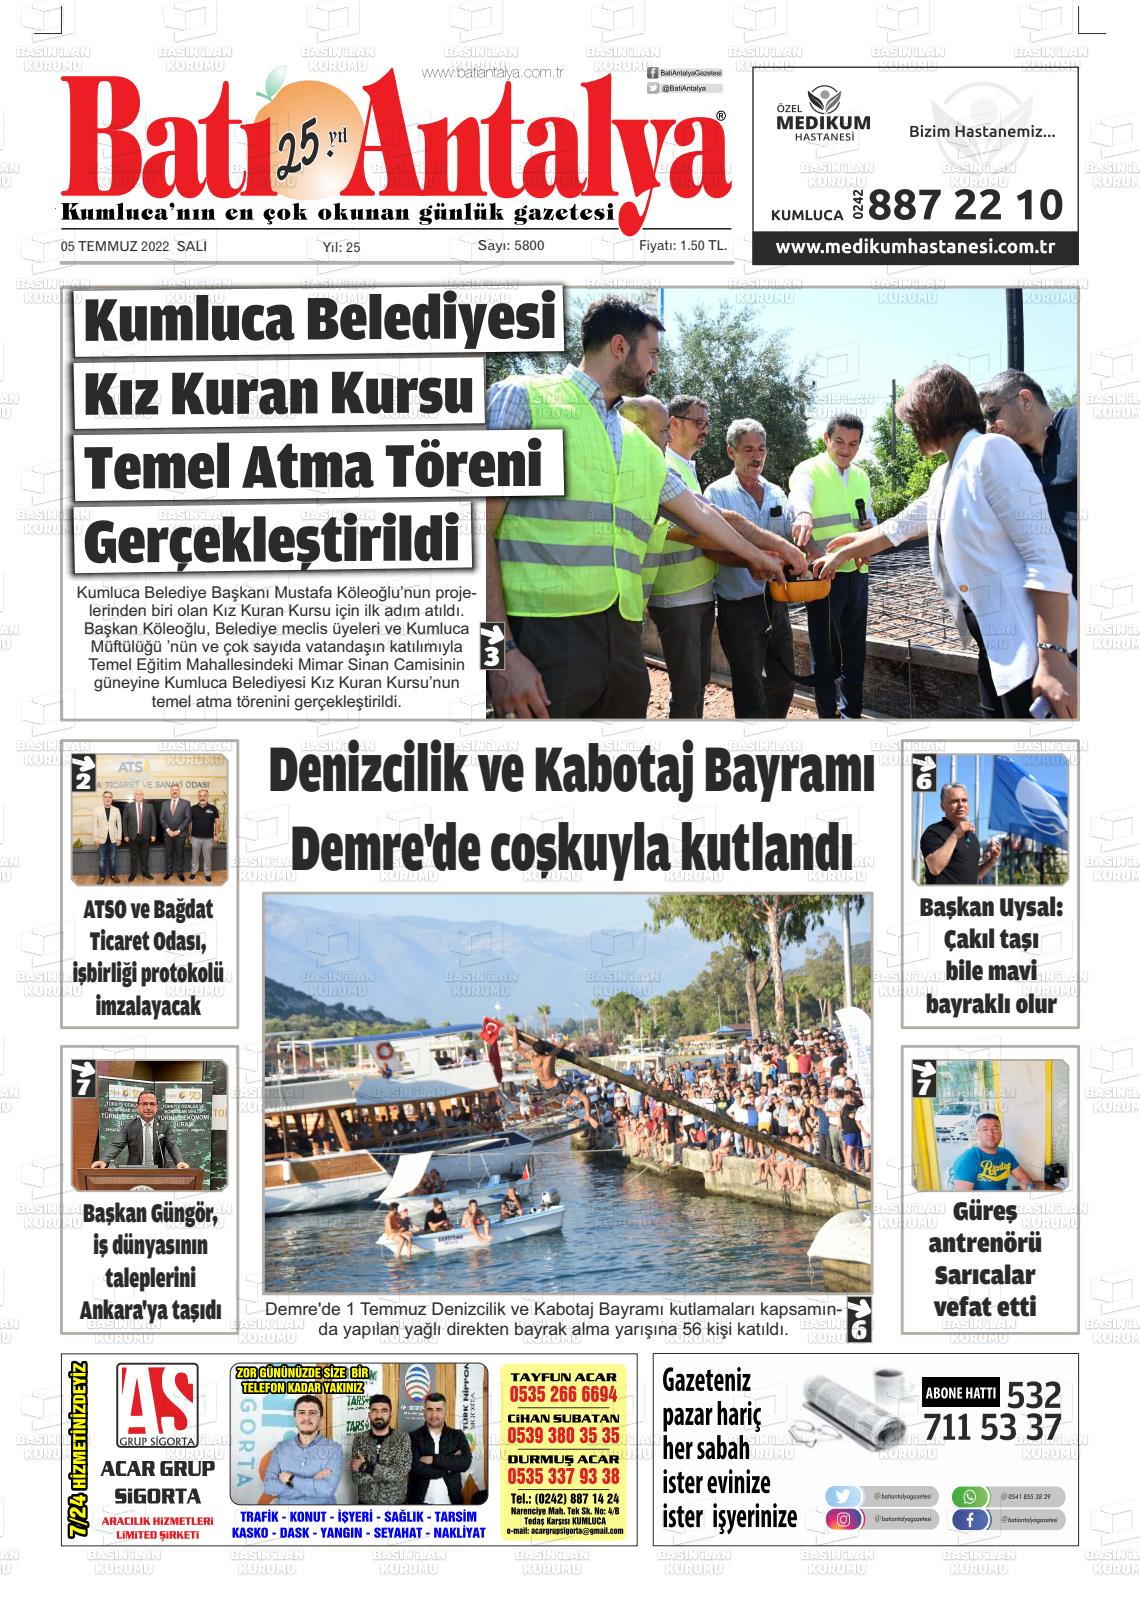 05 Temmuz 2022 Batı Antalya Gazete Manşeti